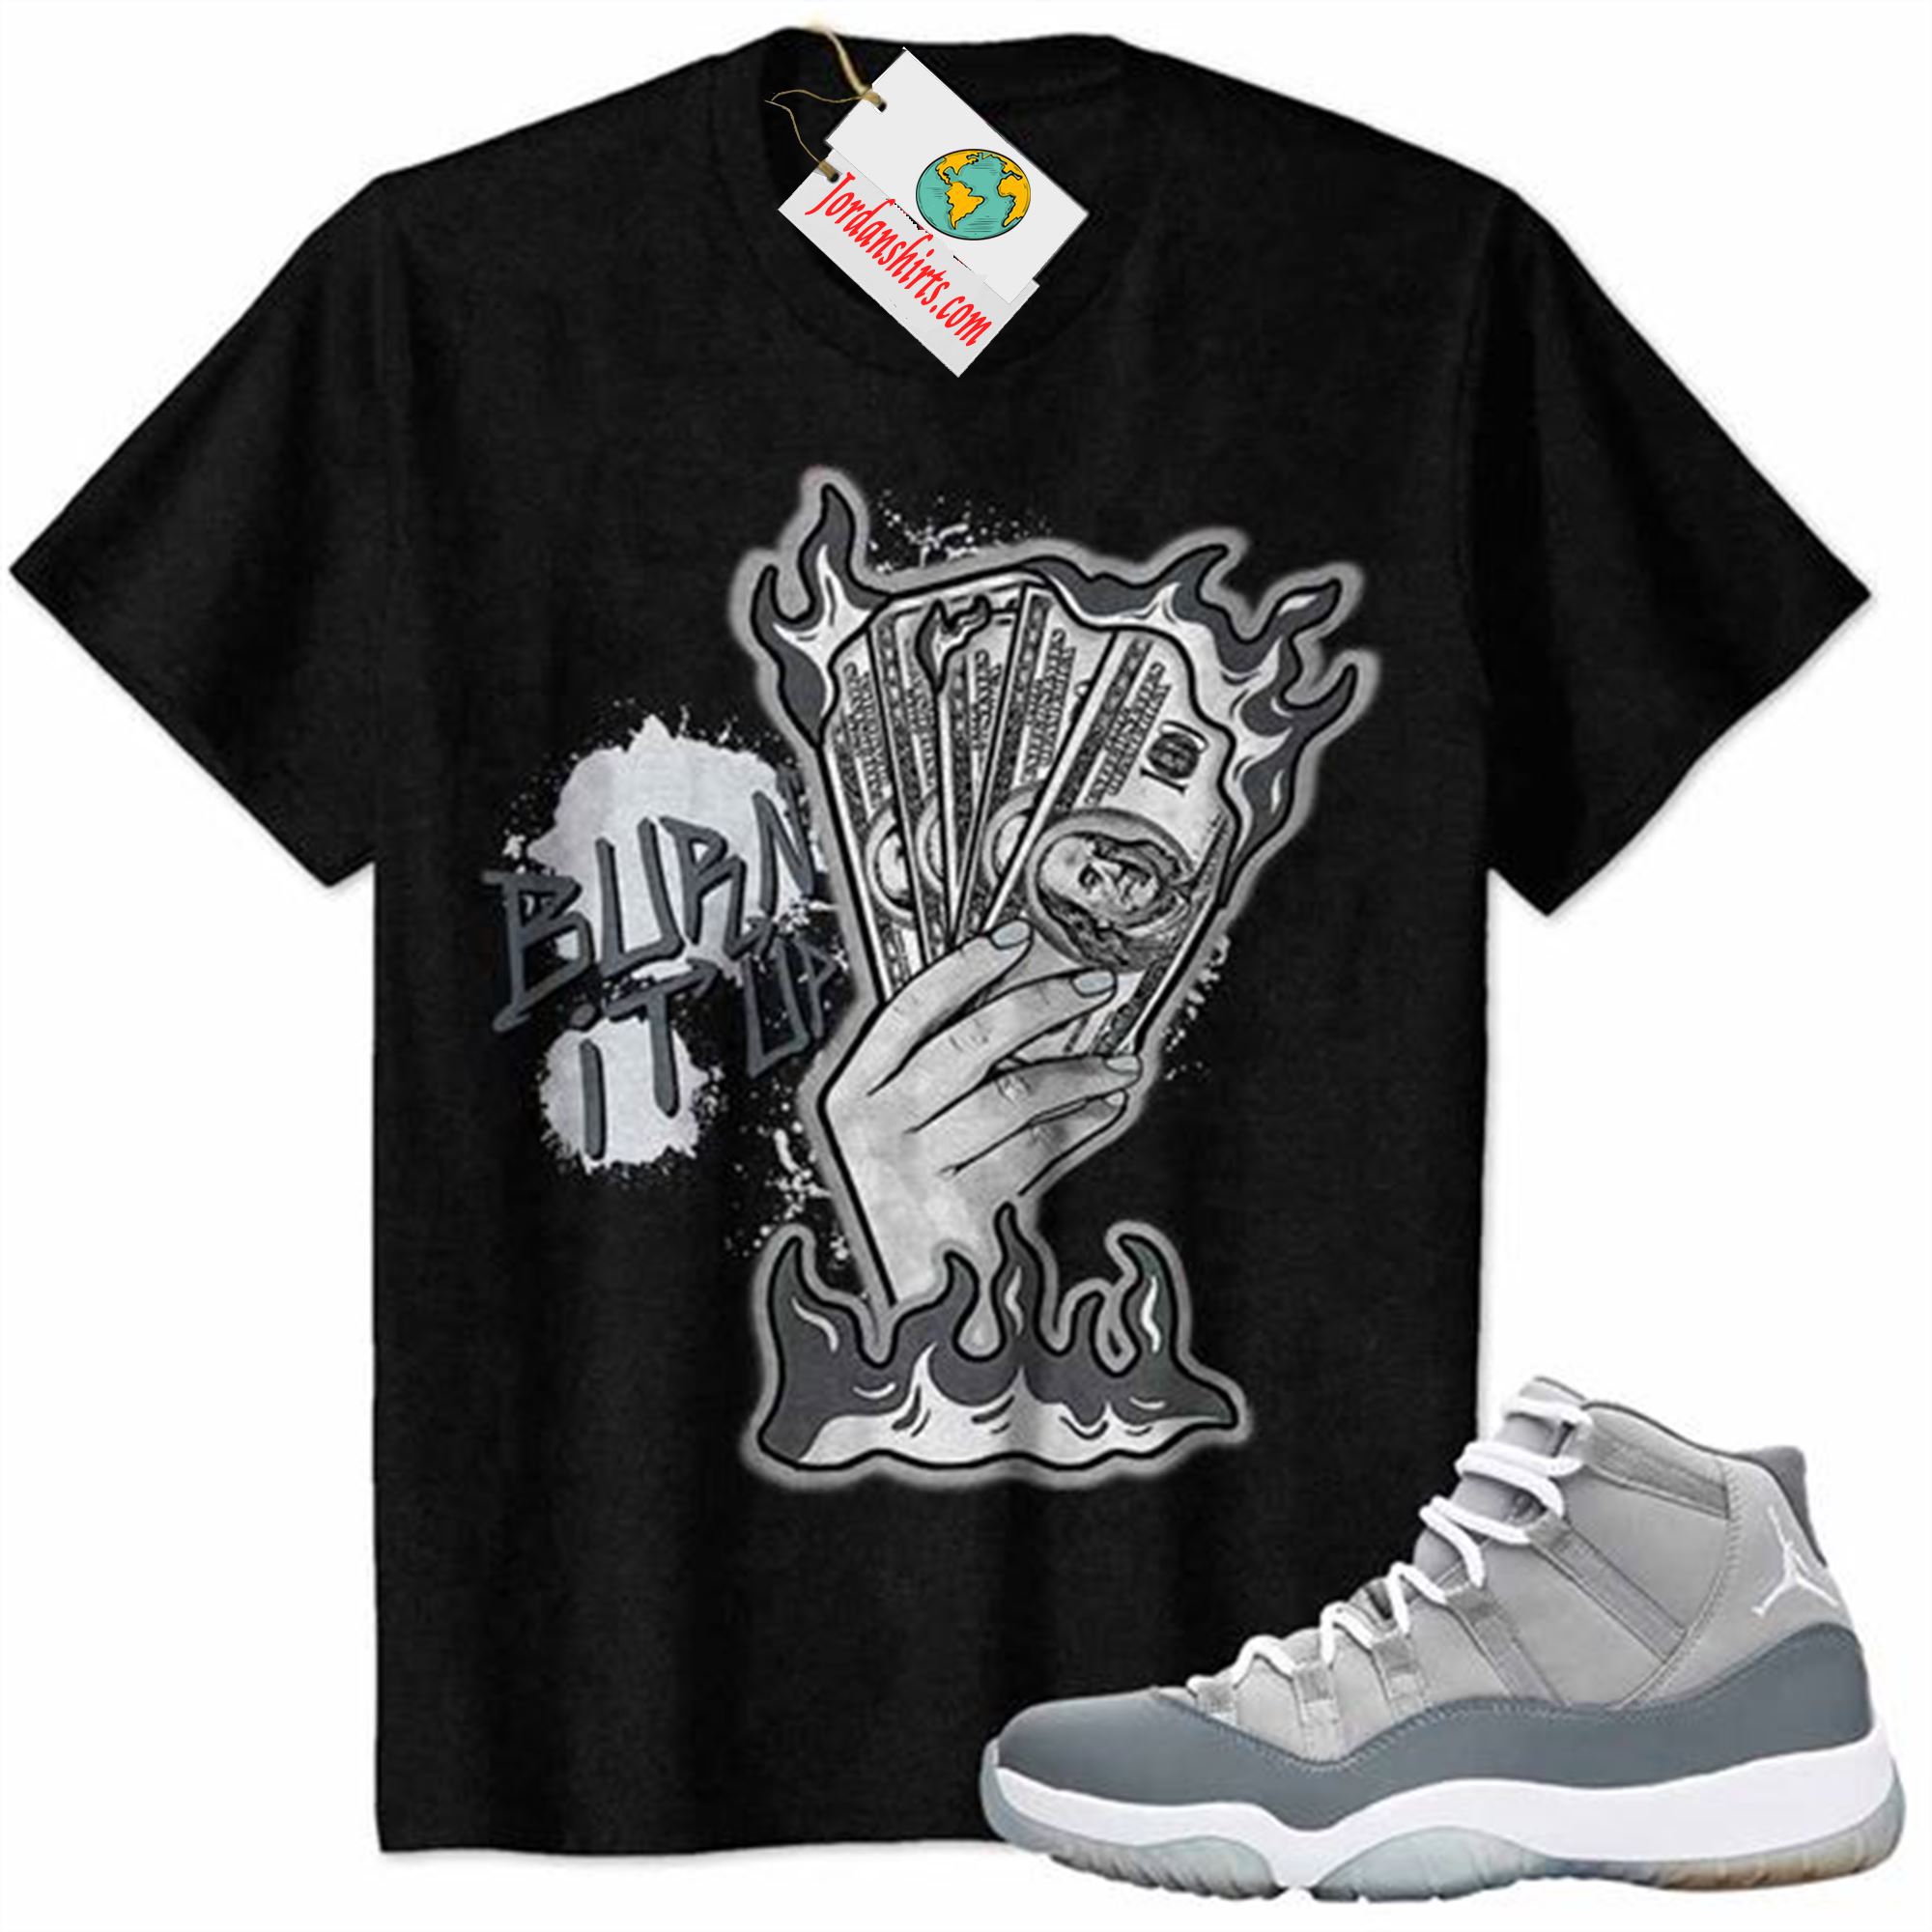 Jordan 11 Shirt, Burn It Up Black Air Jordan 11 Cool Grey 11s Plus Size Up To 5xl